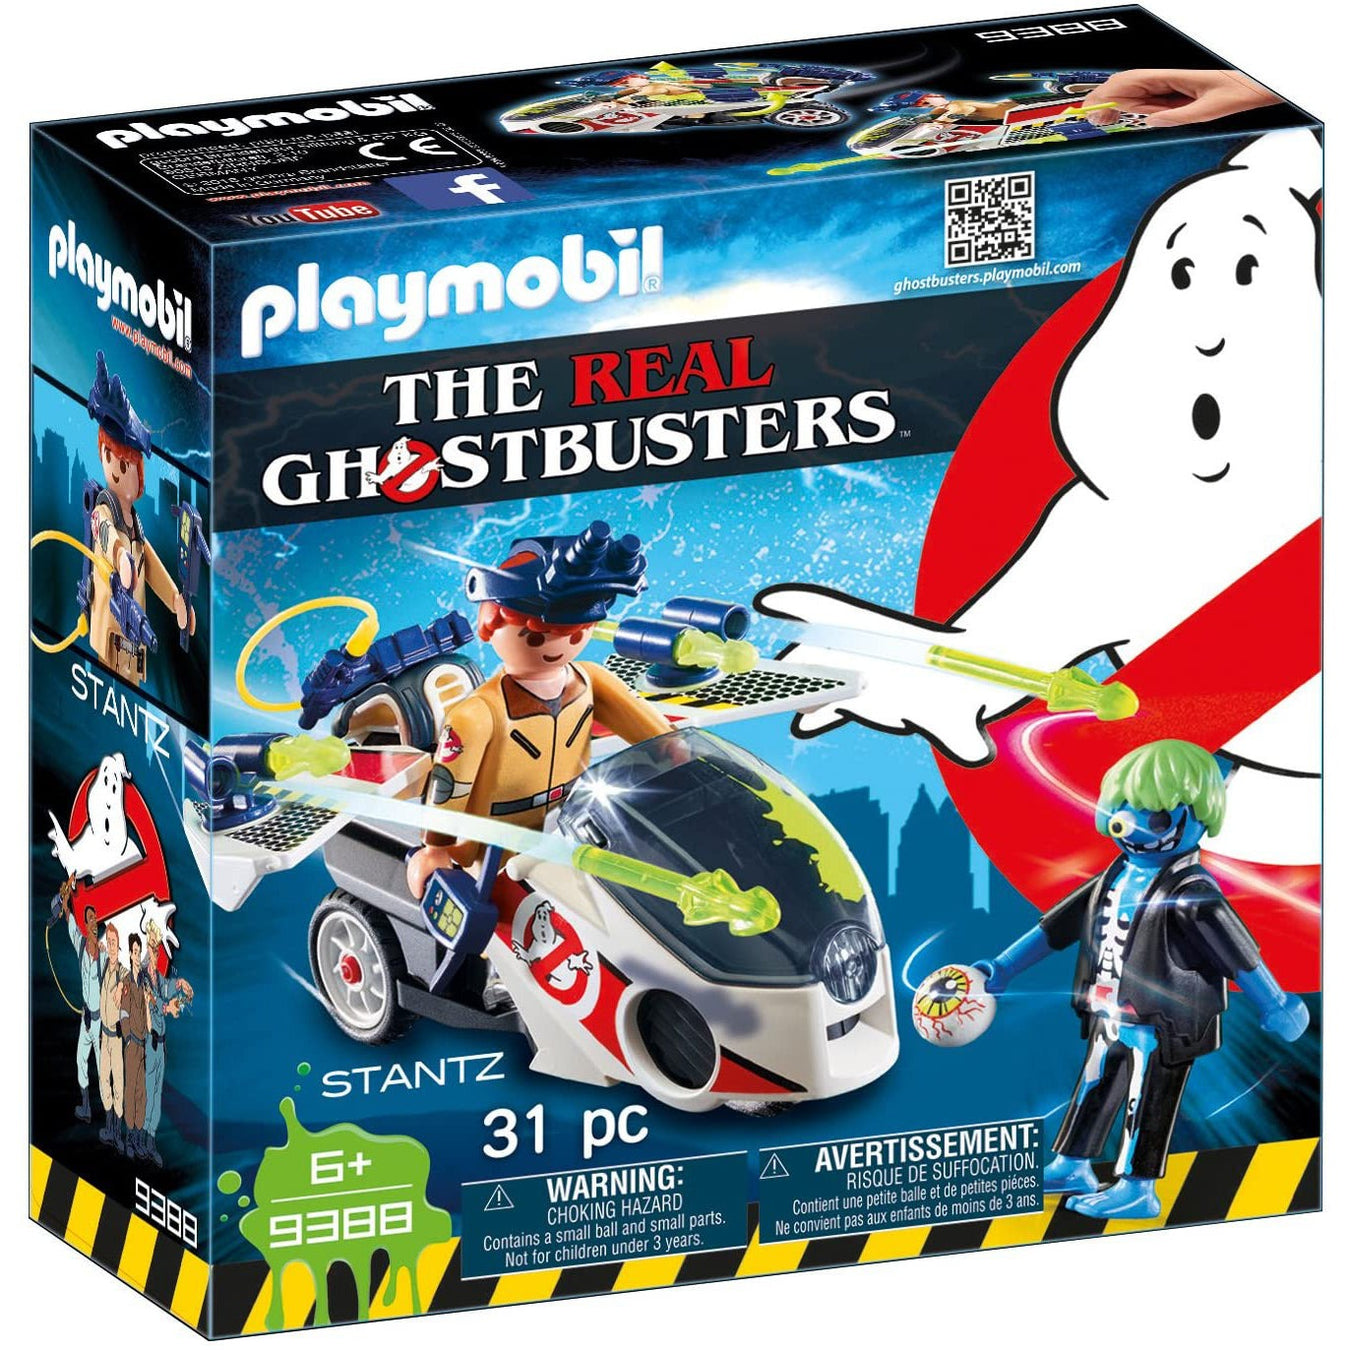 Ghostbusters Playmobil